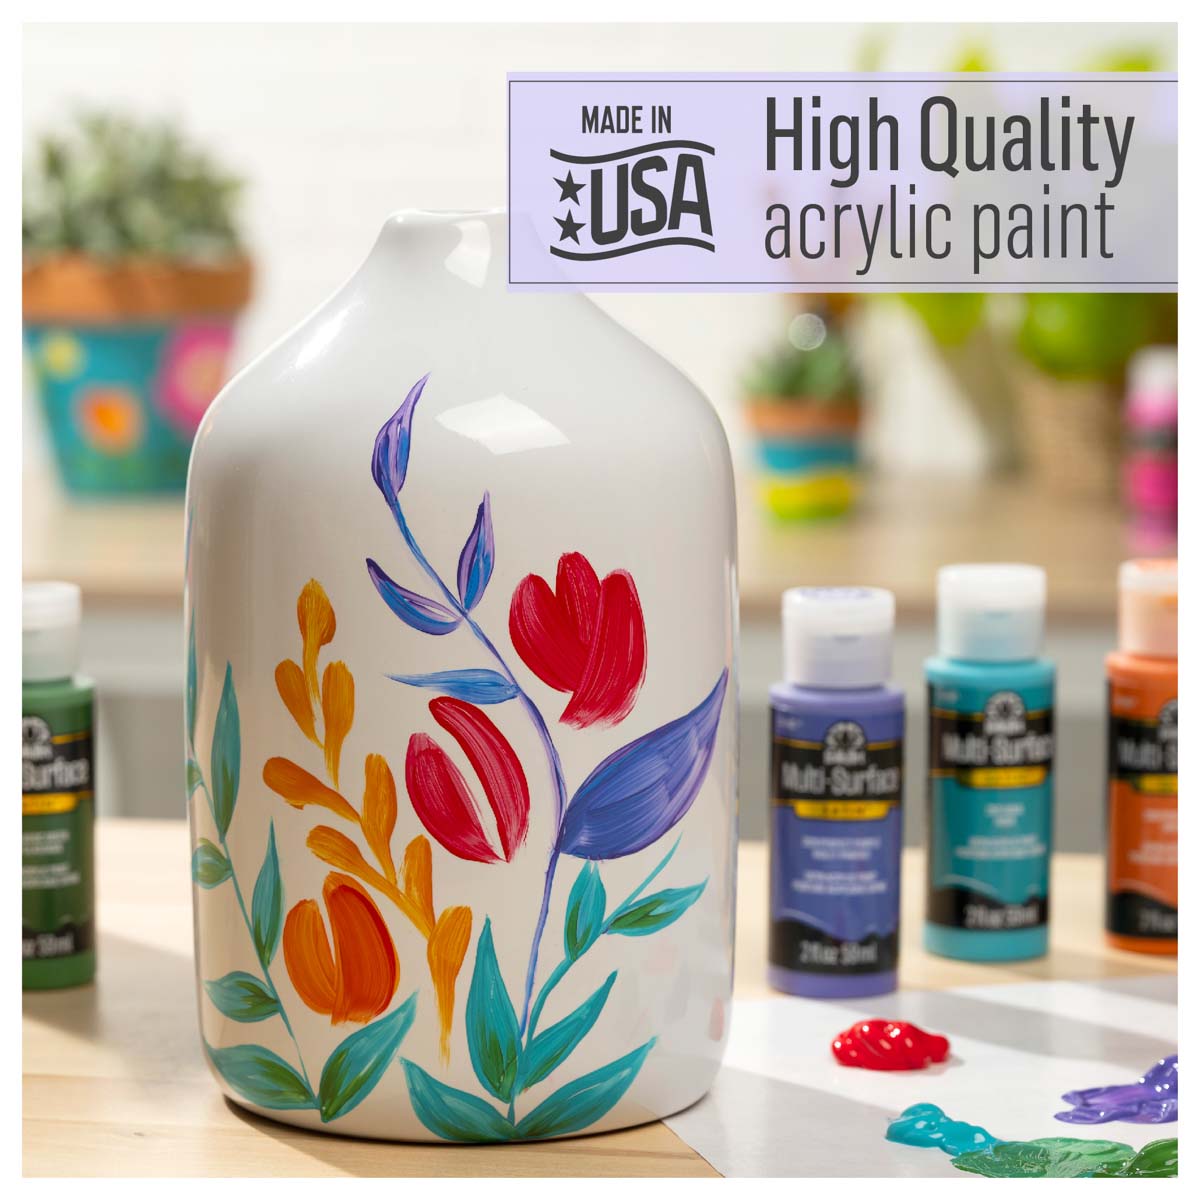 FolkArt ® Multi-Surface Satin Acrylic Paints - Ink Spot, 2 oz. - 2925